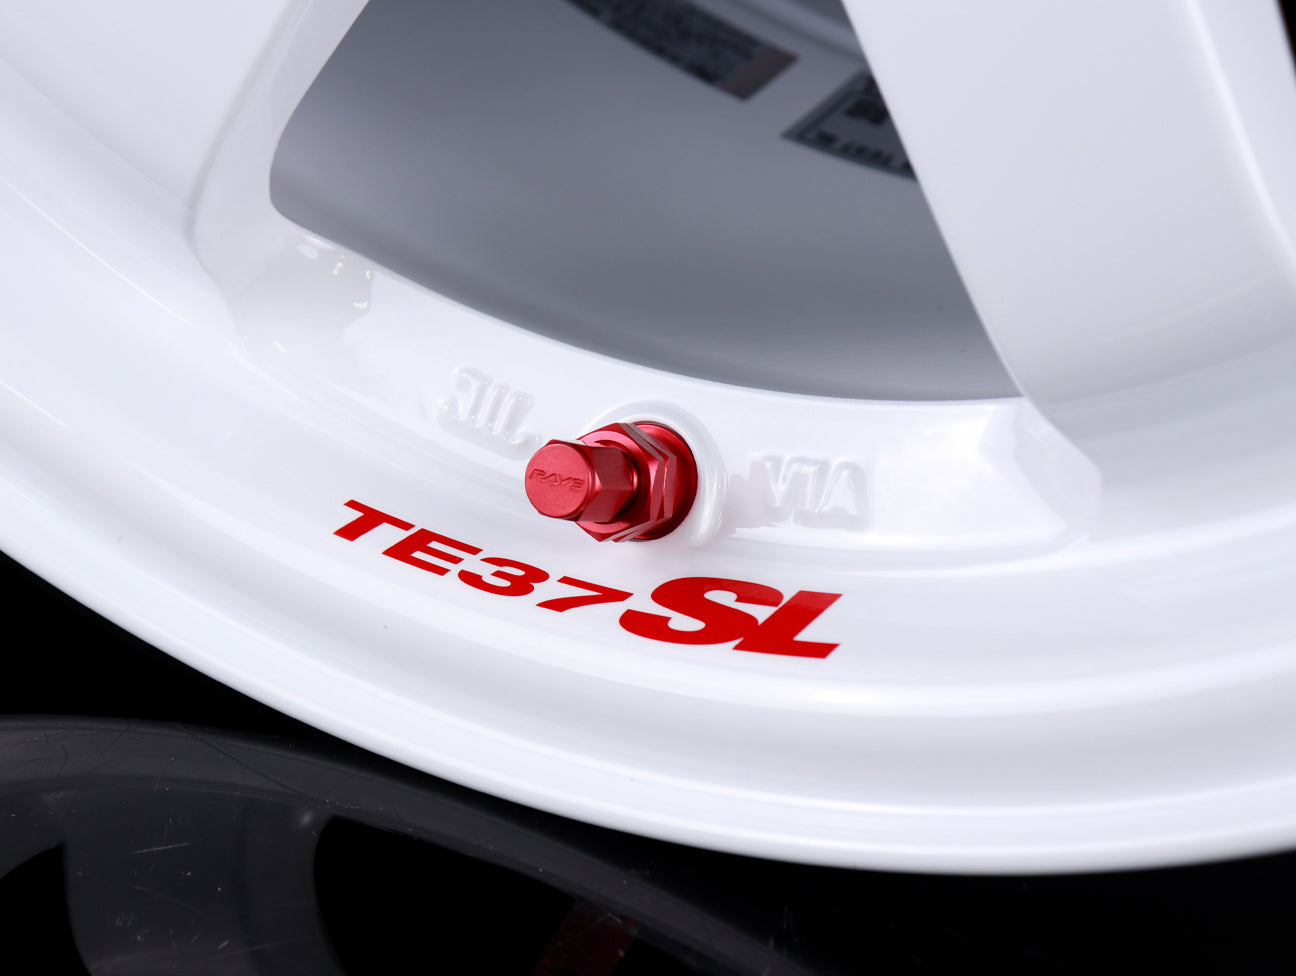 Volk Racing TE37SL Super Lap Edition - Dash White 15x8.0 / 5x114 / +32